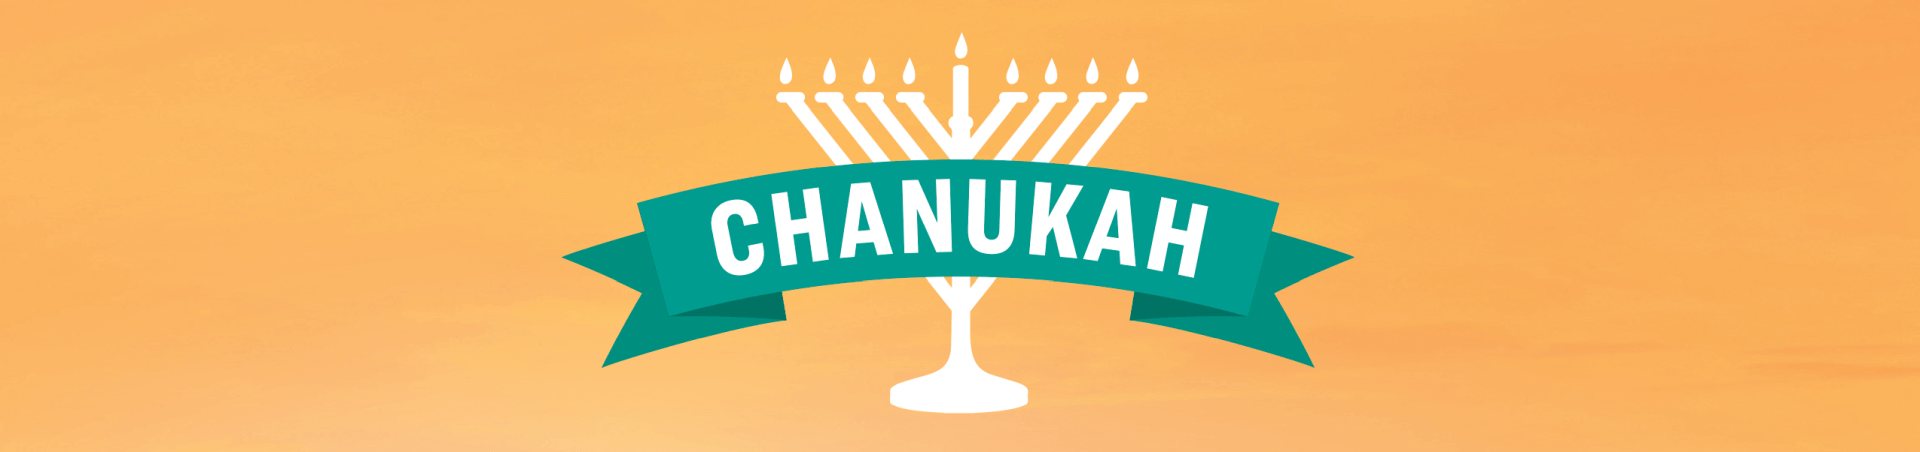 Chanukah banner